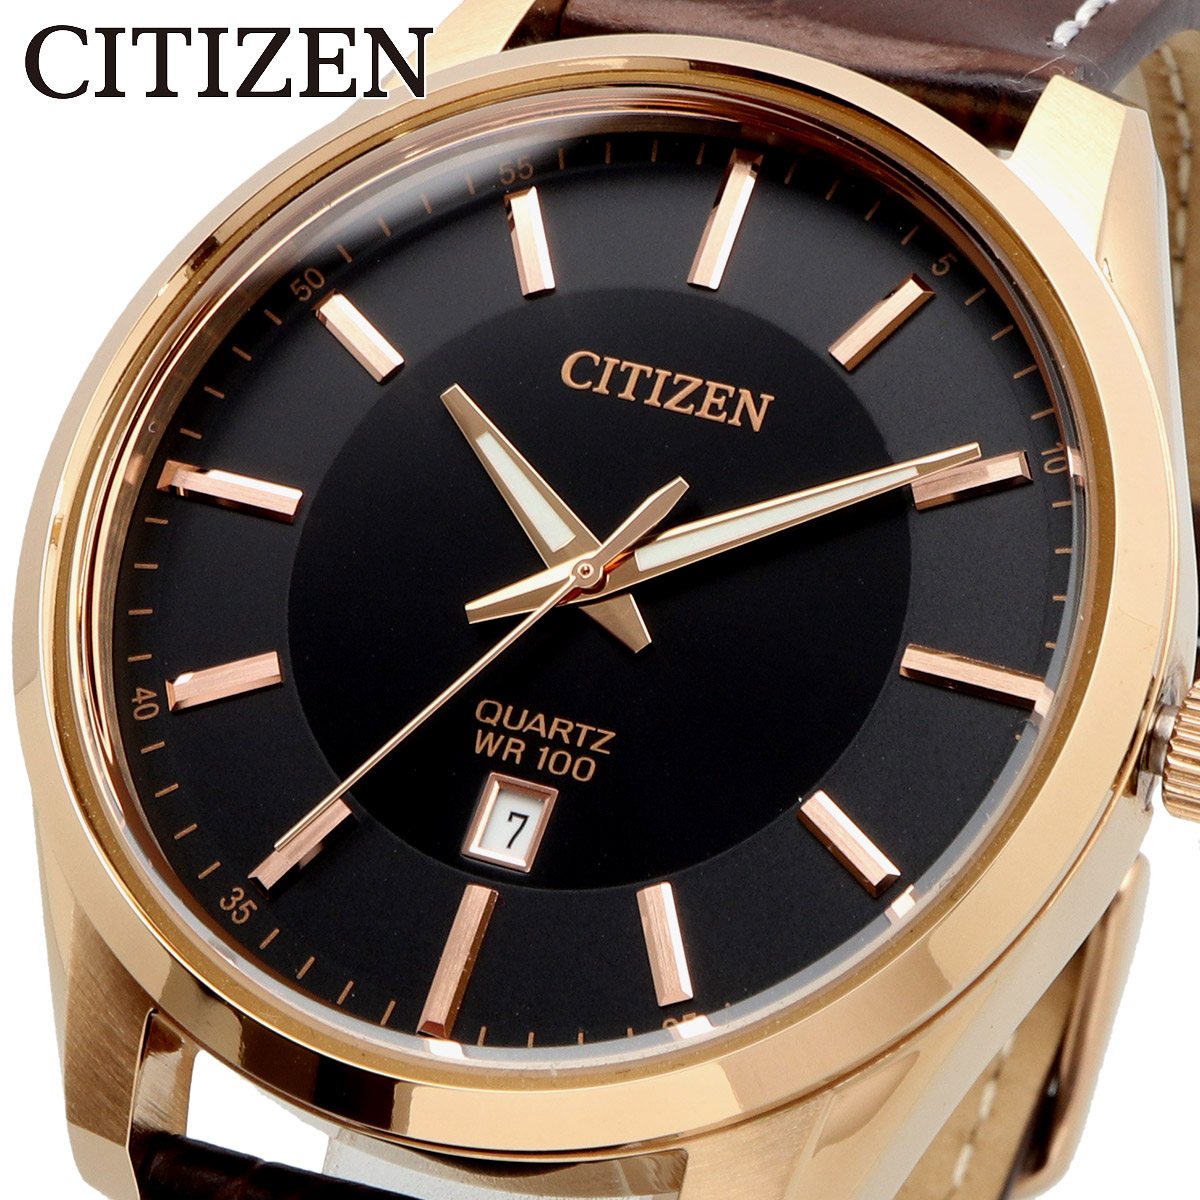 CITIZEN シチズン 腕時計 メンズ 海外モデル クォーツ ビジネス カジュアル  BI1033-04E